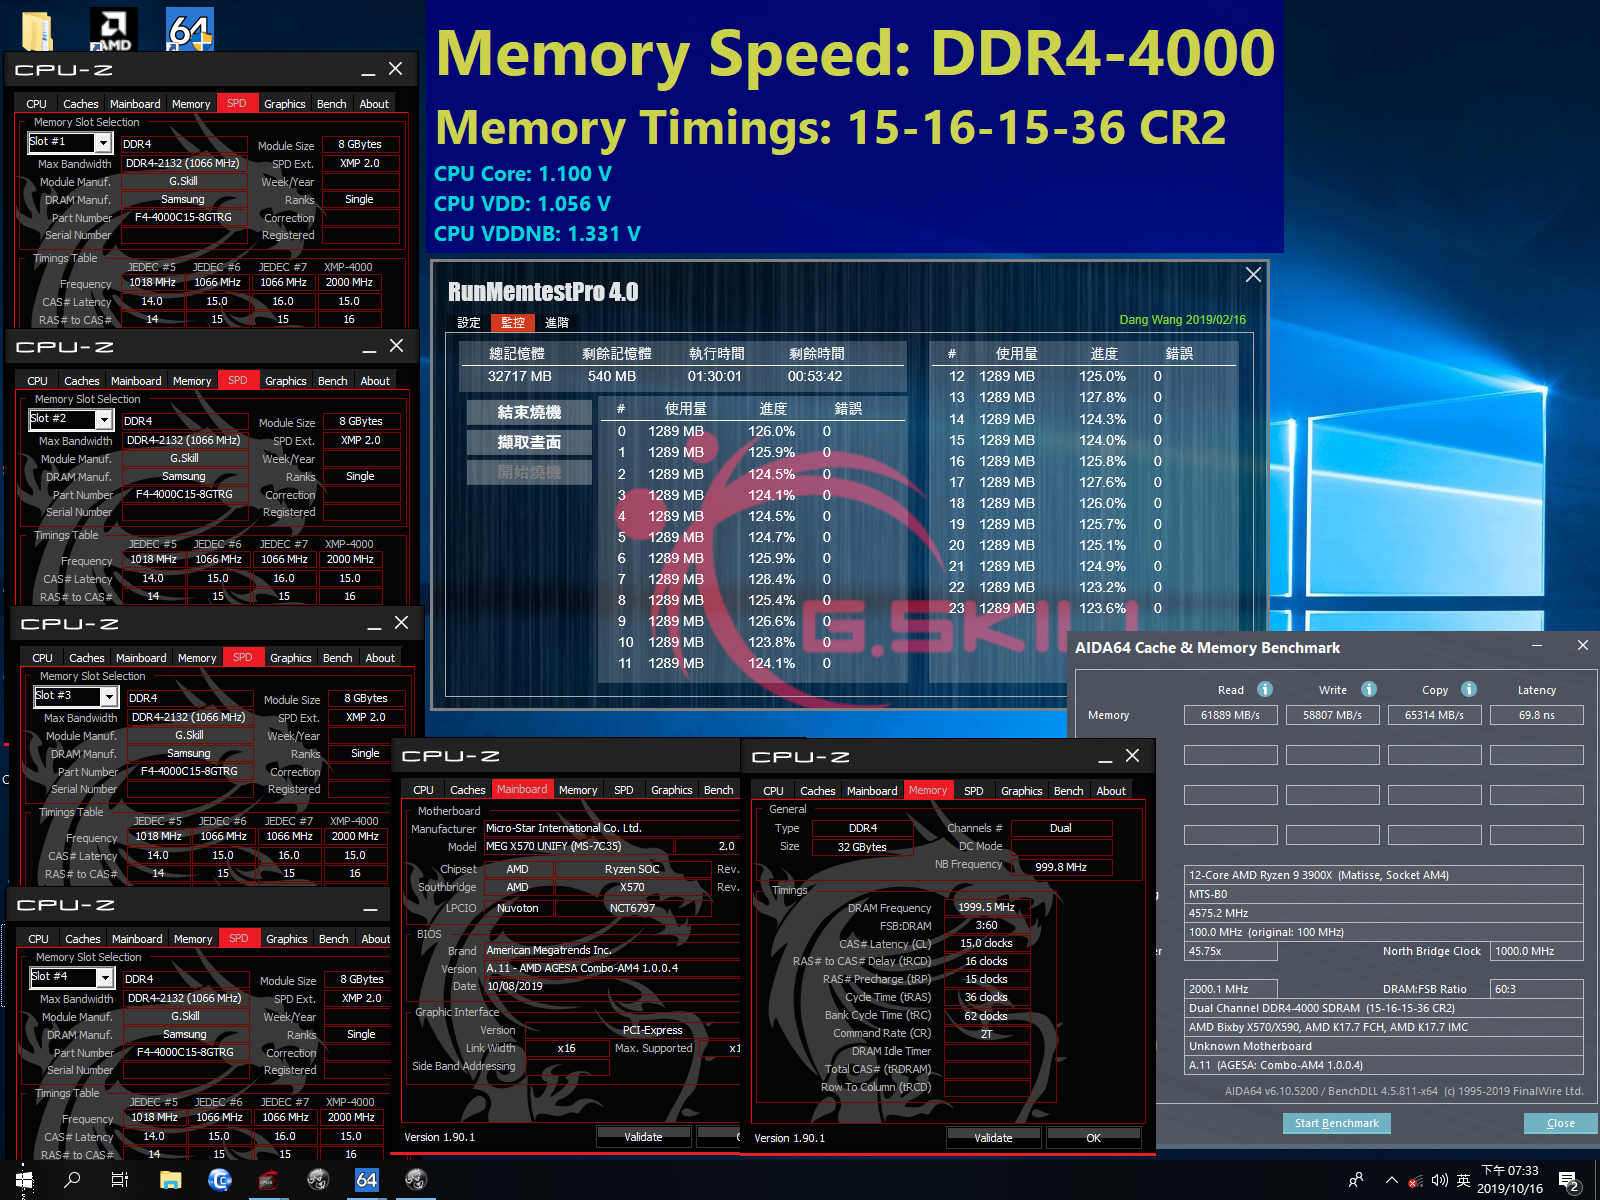 Royal Memory: G.Skill's 32 GB DDR4-4000 CL15 Kit for AMD & Intel